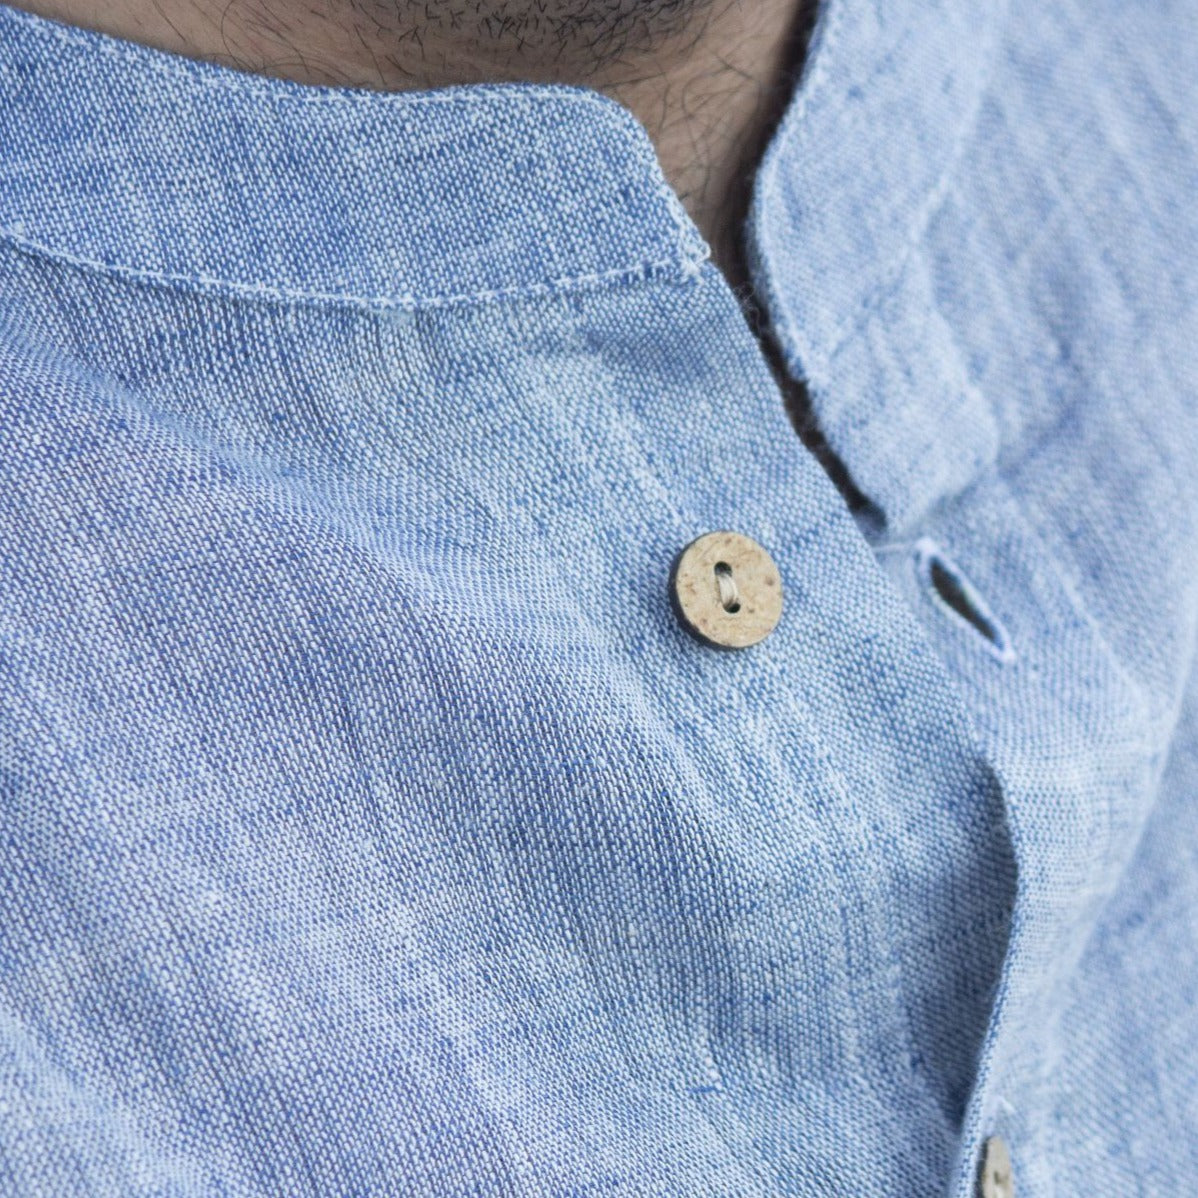 Kala Handspun Cotton Unisex Shirt Blue highly absorbent, soft, comfortable Apparels Accessories